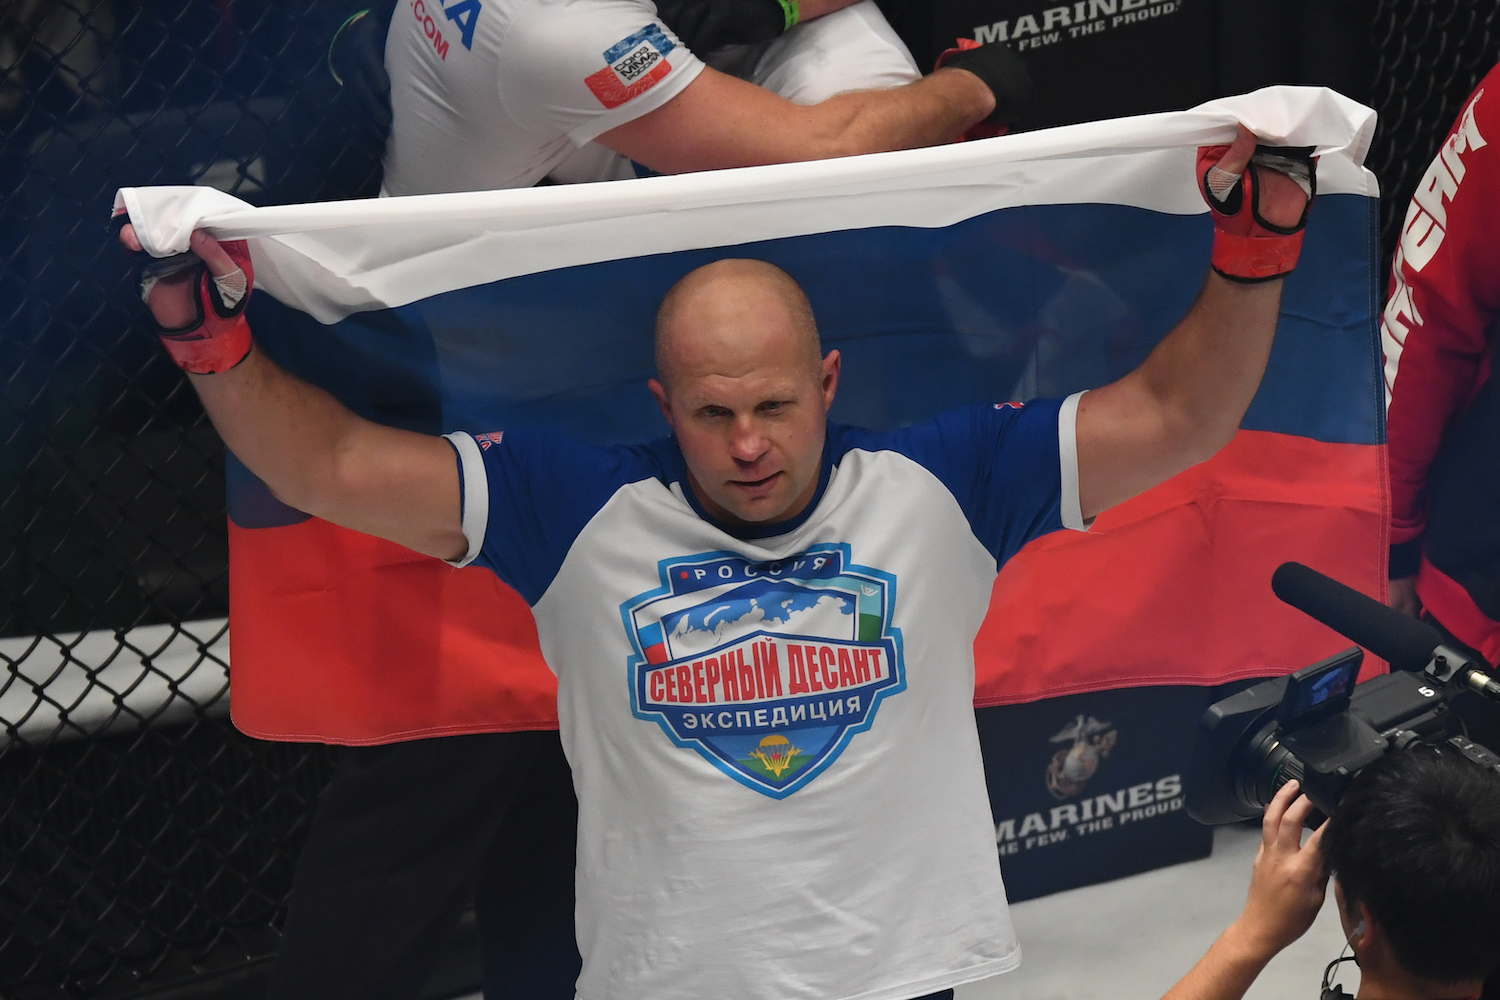 Stipe Miocic and Daniel Cormier Second Behind Fedor Emelianenko for Greatest MMA Heavyweight